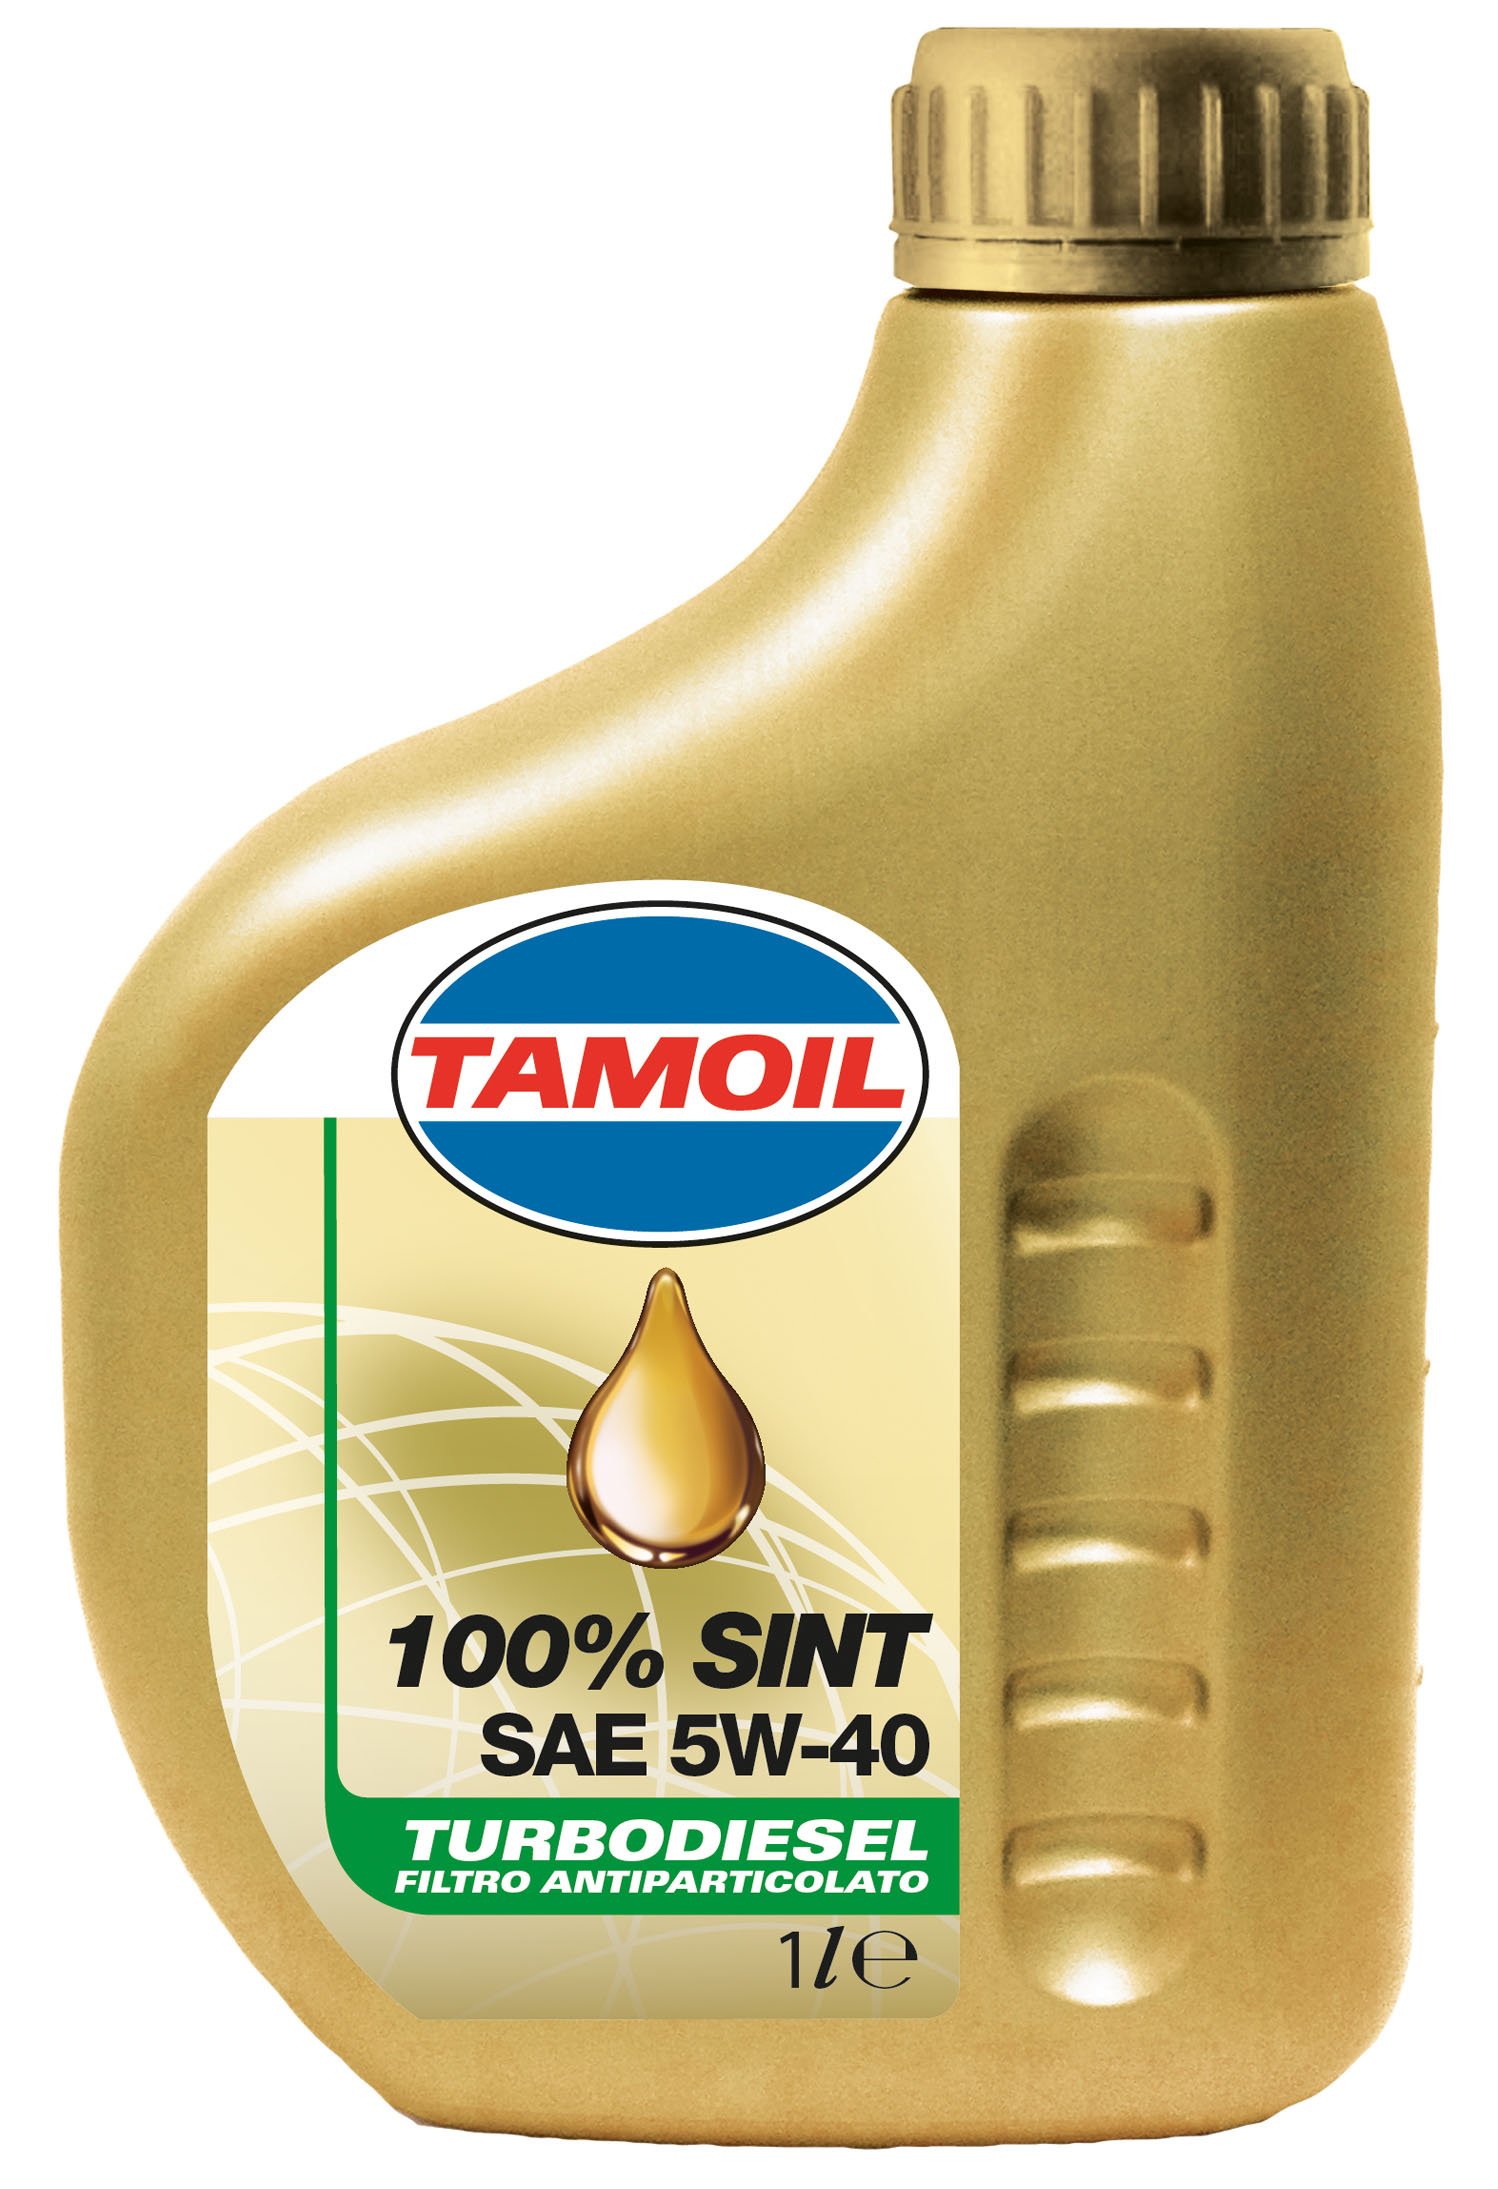 Tamoil 100% Sint SAE 5W-40 TD olio per motore 1 L Auto